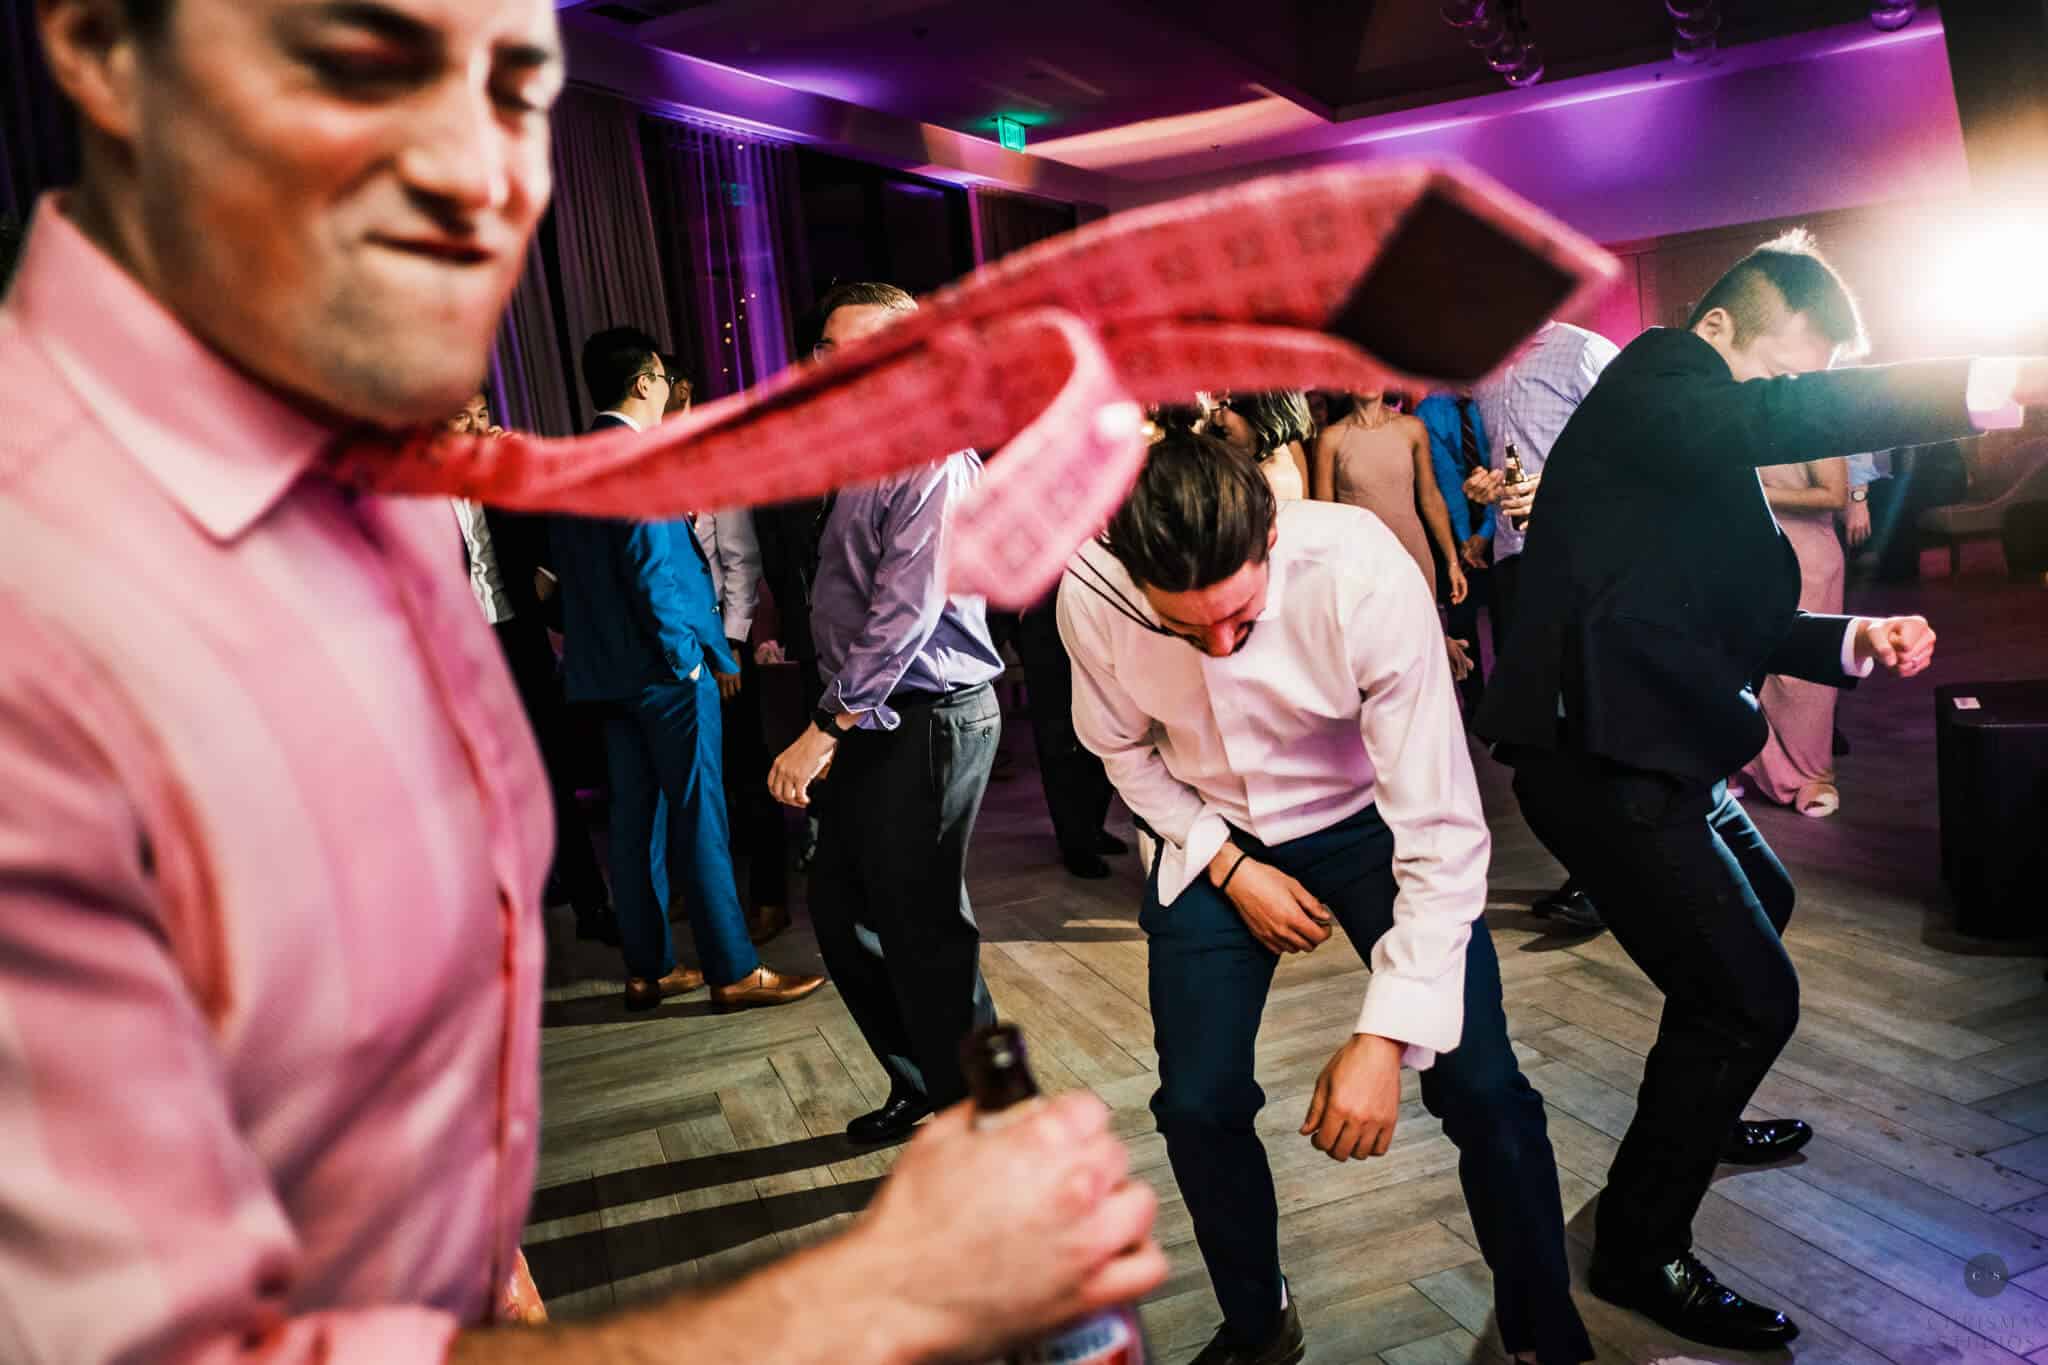 Wedding guests dance vigorously to DJ music.